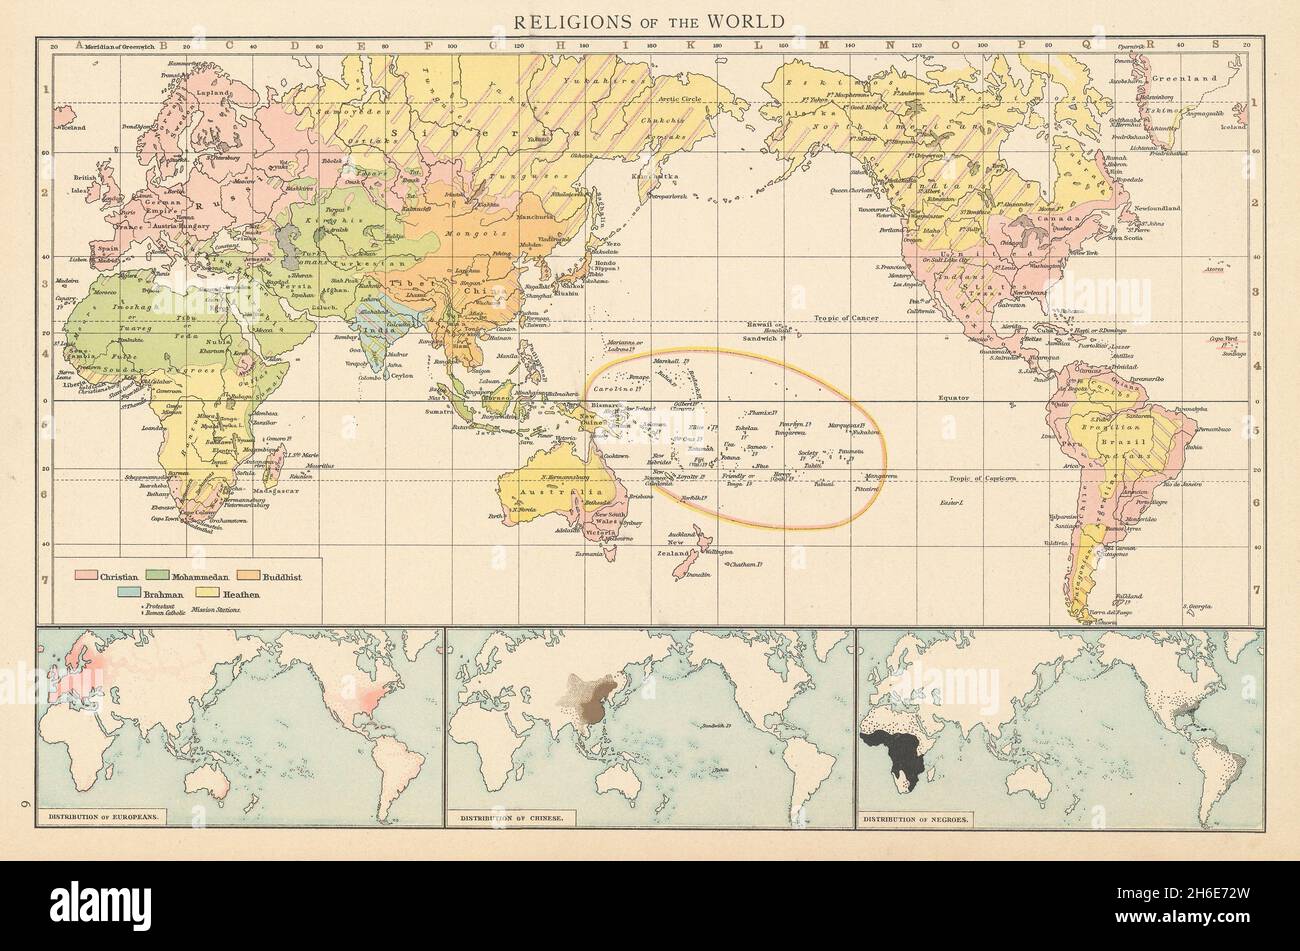 Religions of the world. Christian Islam Buddhist Heathen Hindu. TIMES 1895 map Stock Photo